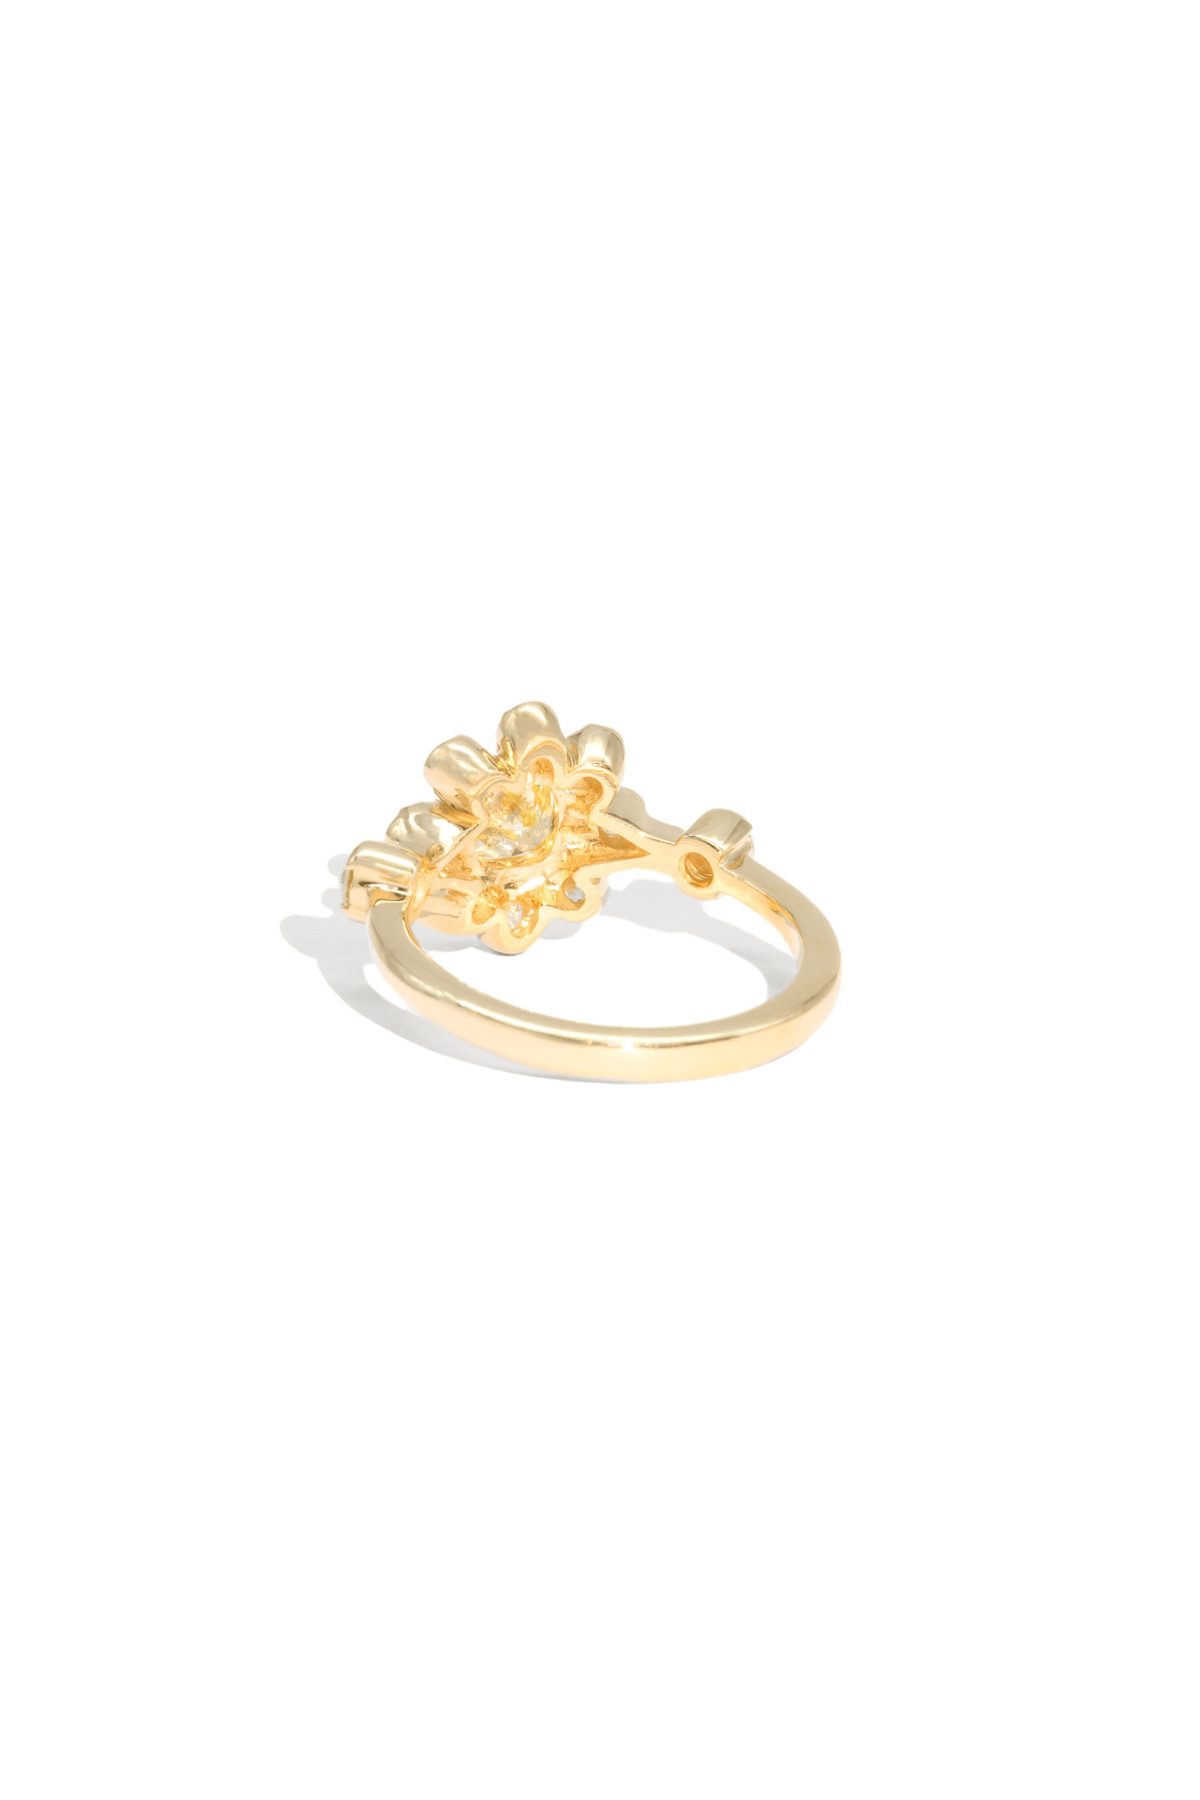 The Flora 1ct Yellow Diamond Ring